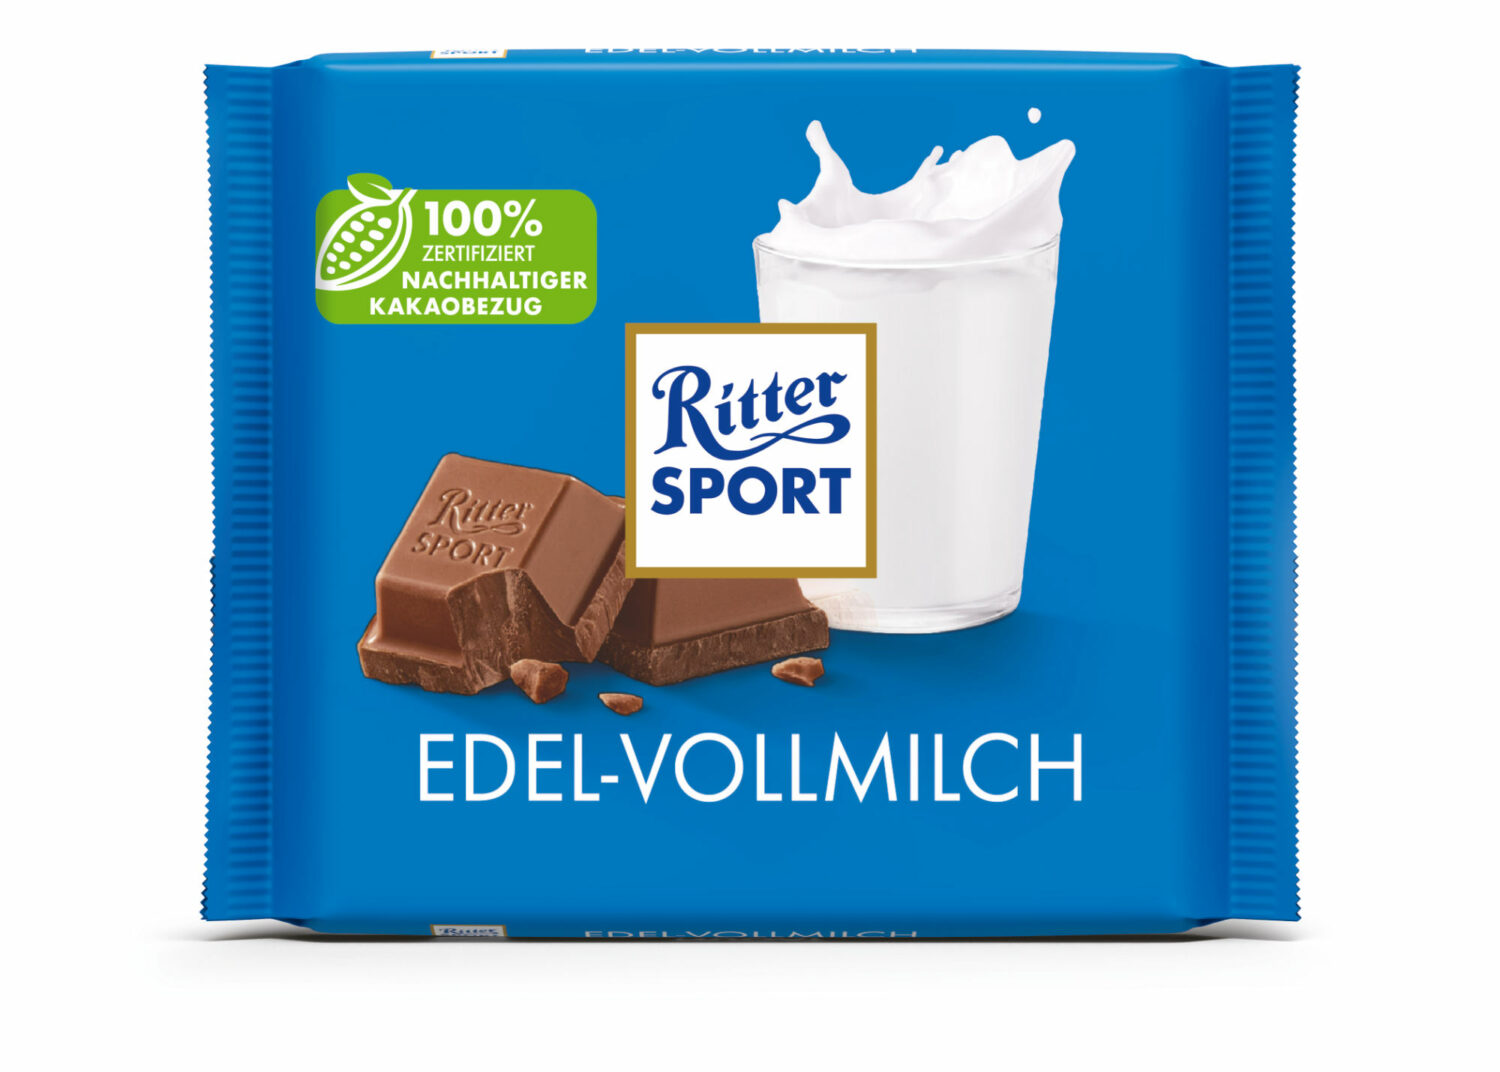 Ritter Sport Edel-Vollmilch (2022)